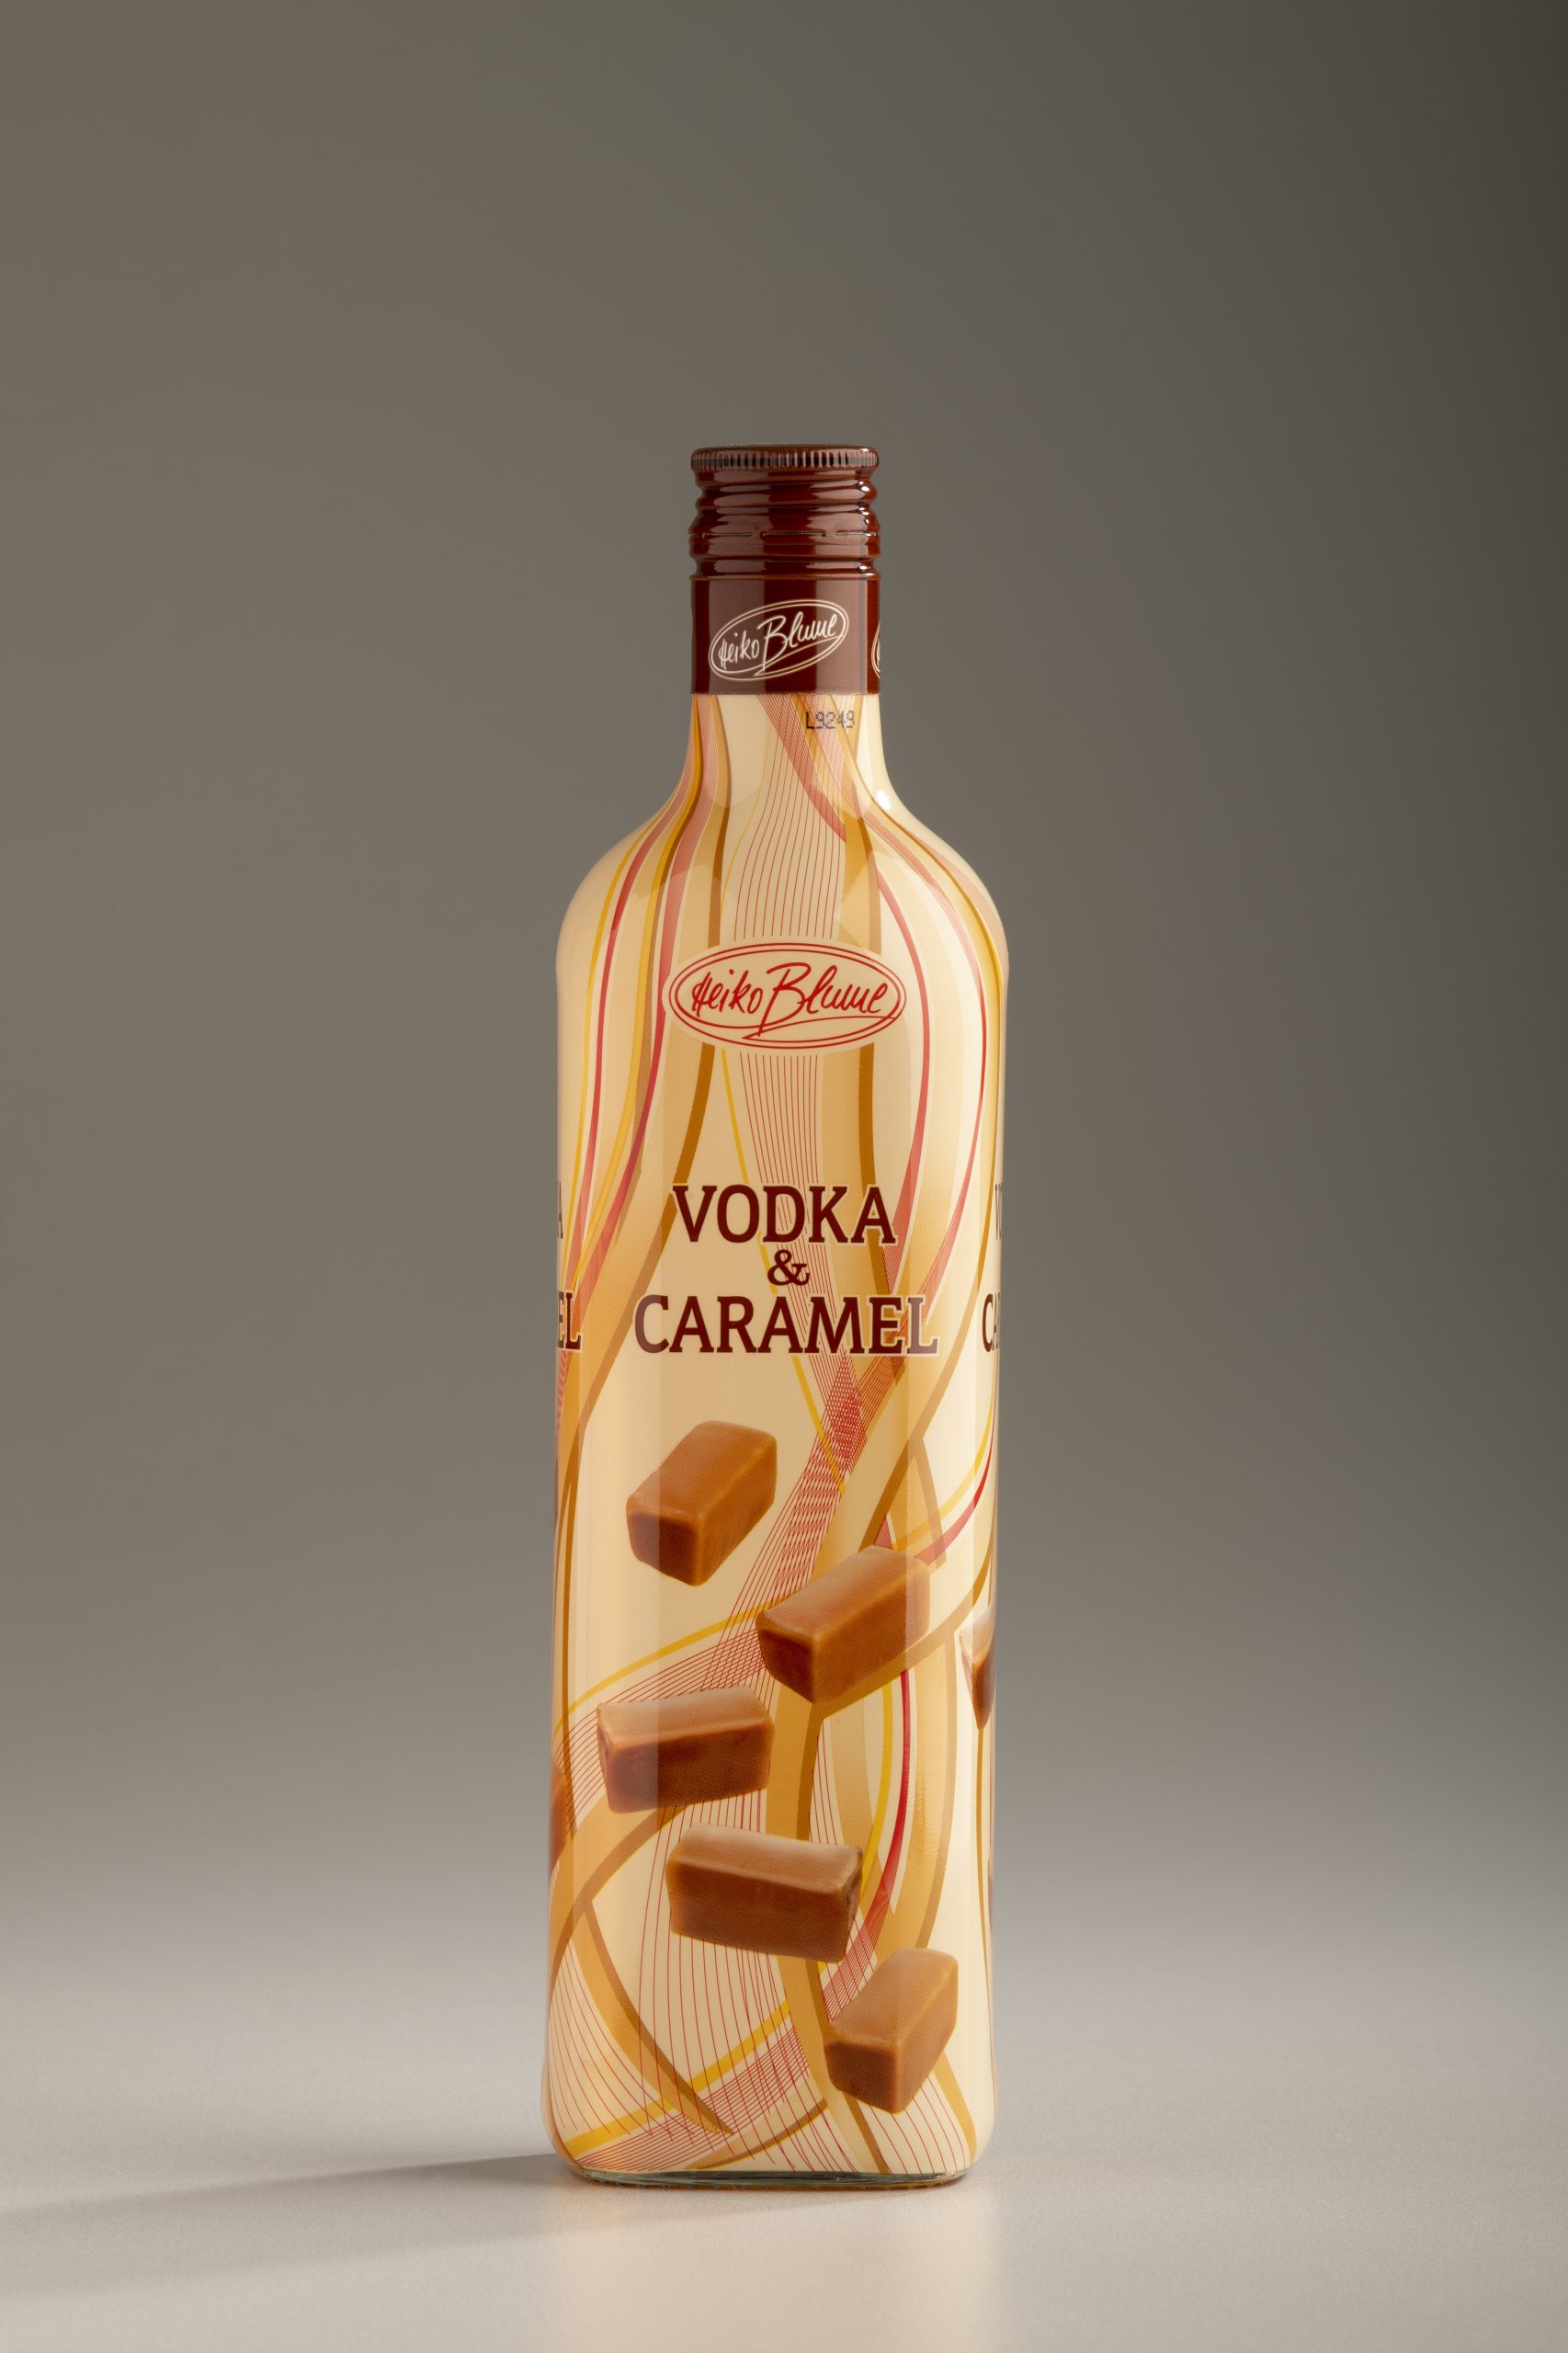 https://heiko-blume-shop.com/wp-content/uploads/2020/06/vodka_caramel-scaled.jpg